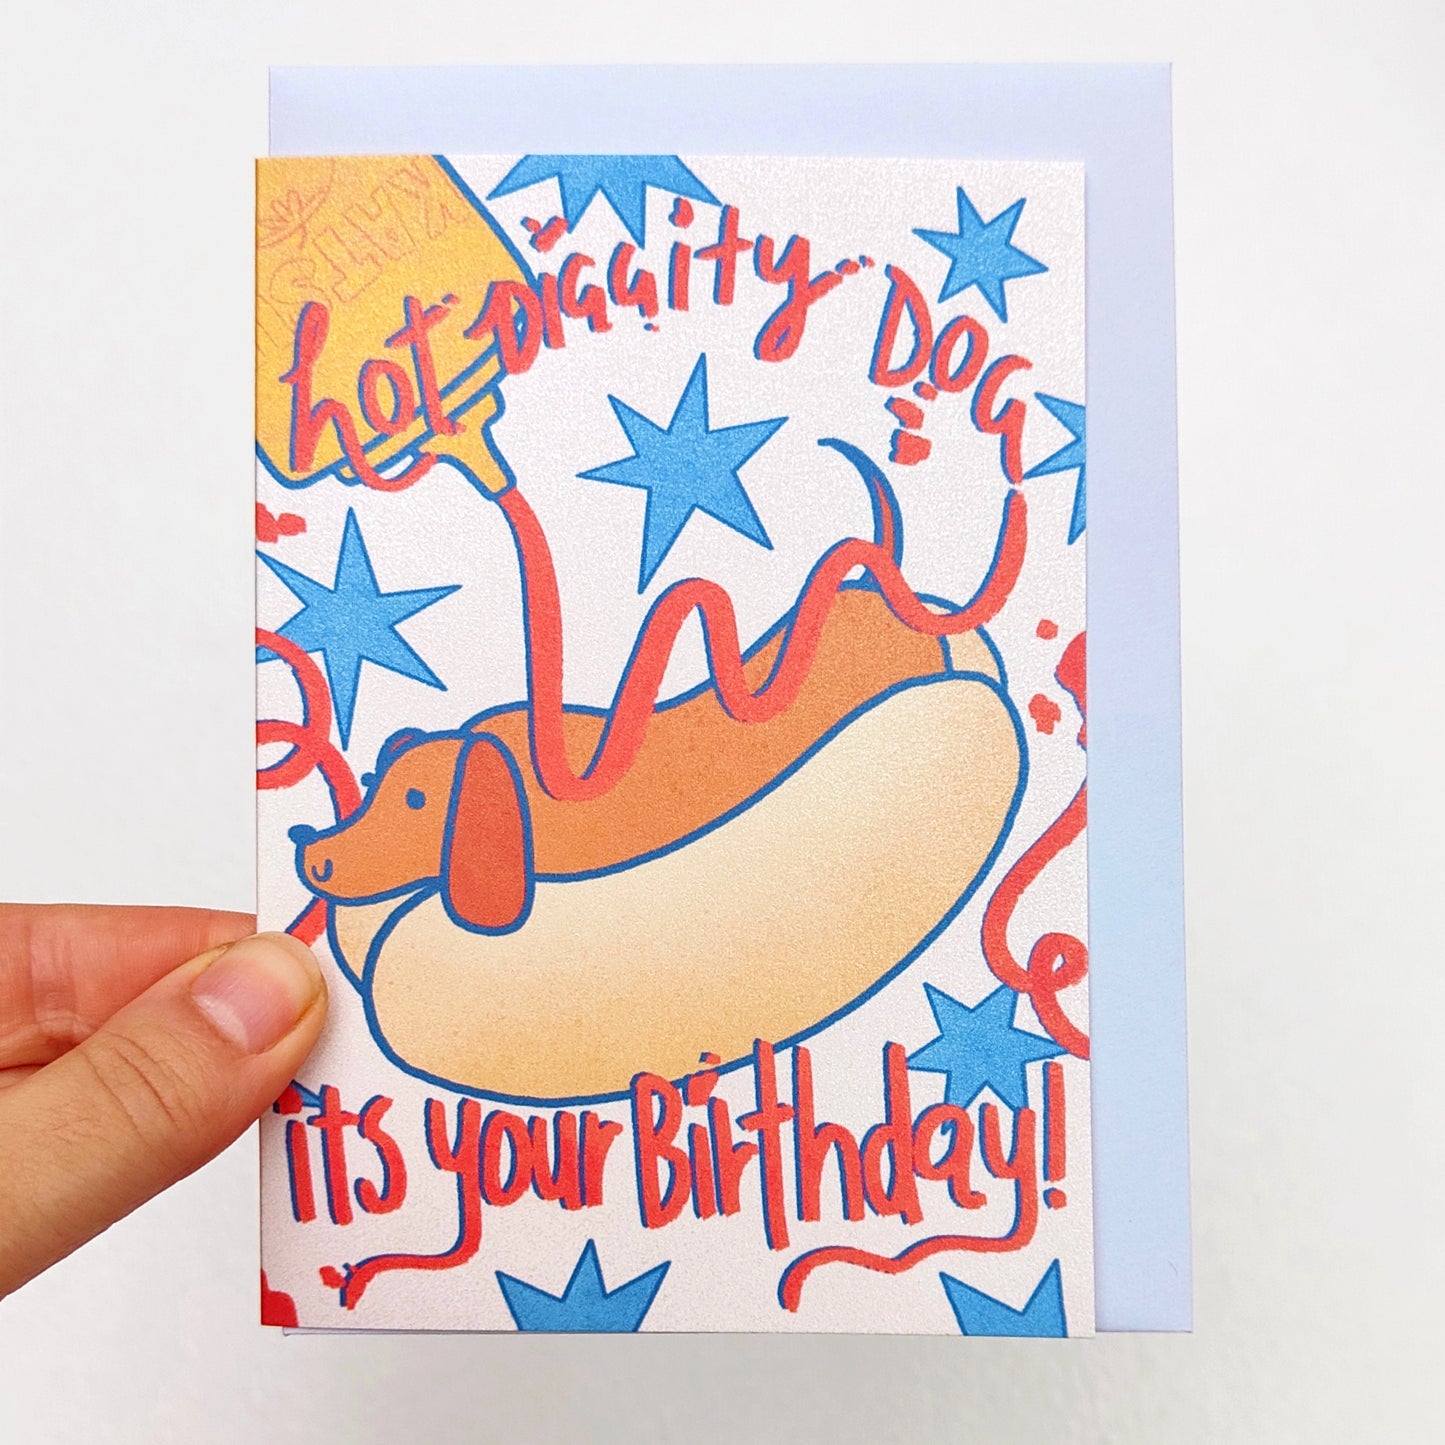 Hot Dog Birthday Greetings Card